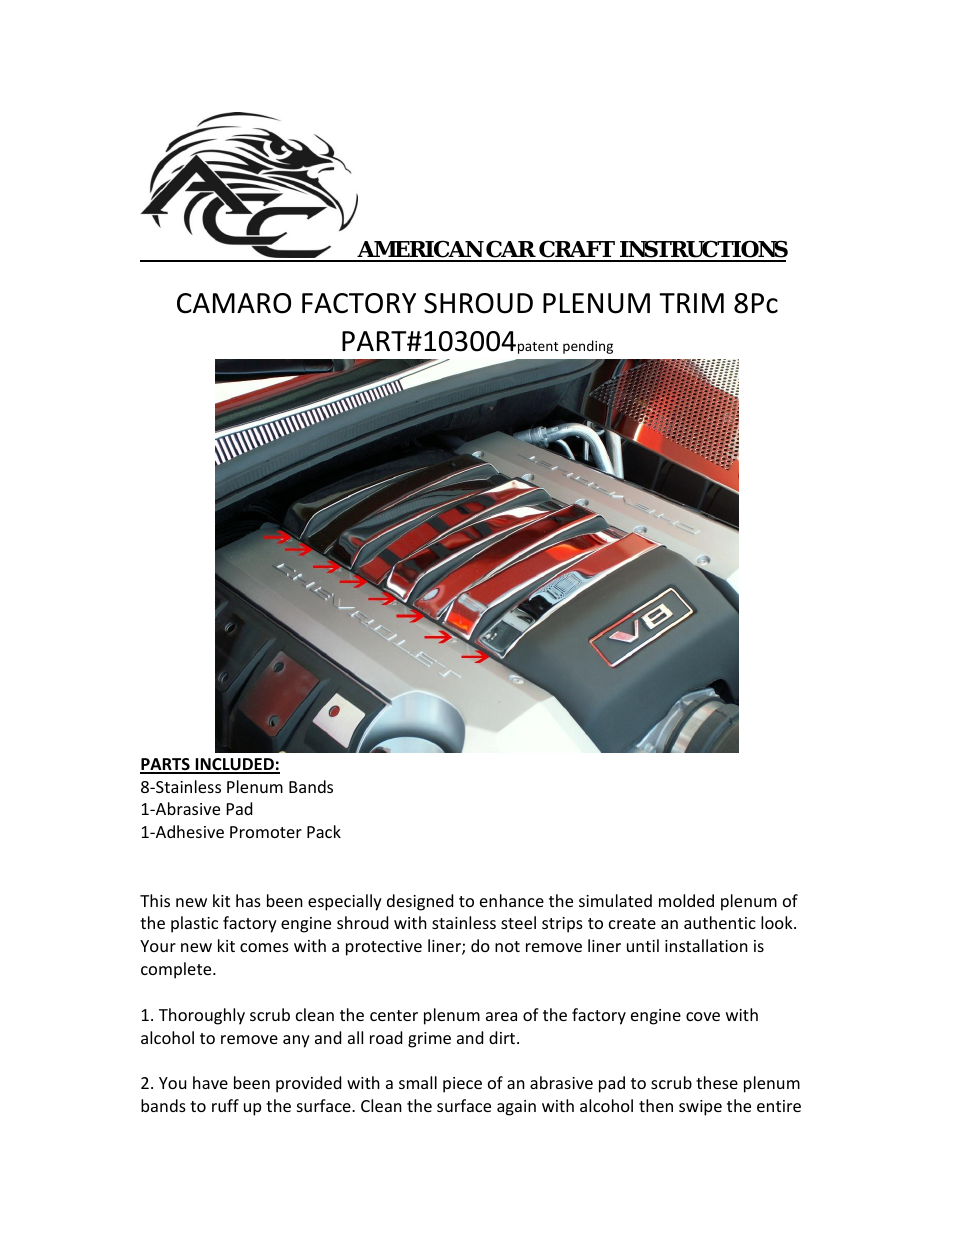 Camaro Factory Shroud Trim Polished Plenum Kit 8Pc 2010-2013